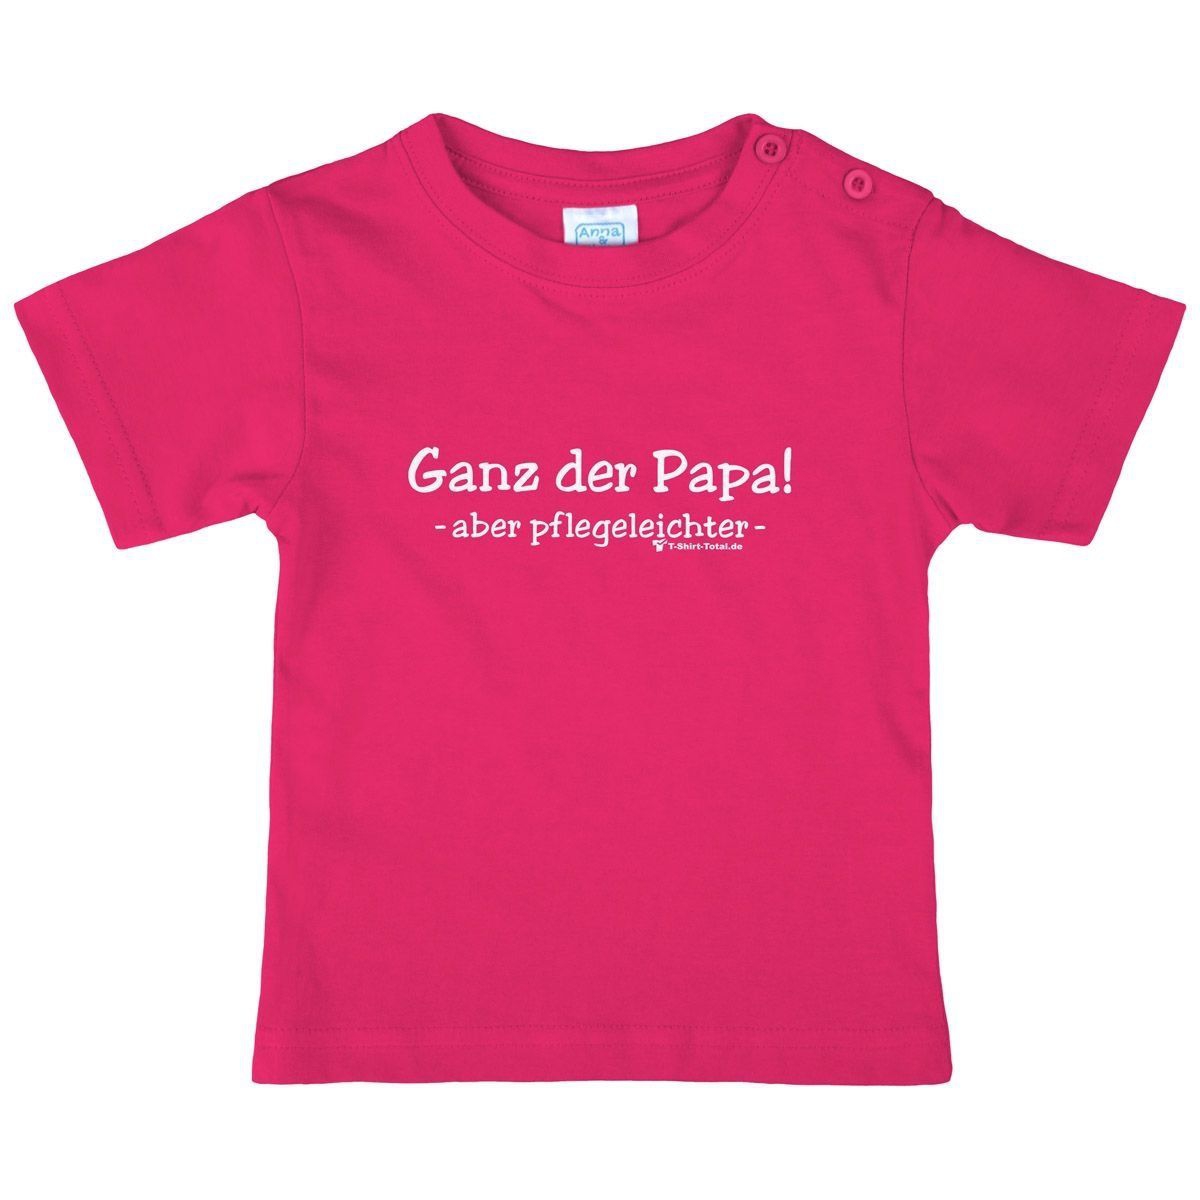 Ganz der Papa Kinder T-Shirt pink 56 / 62